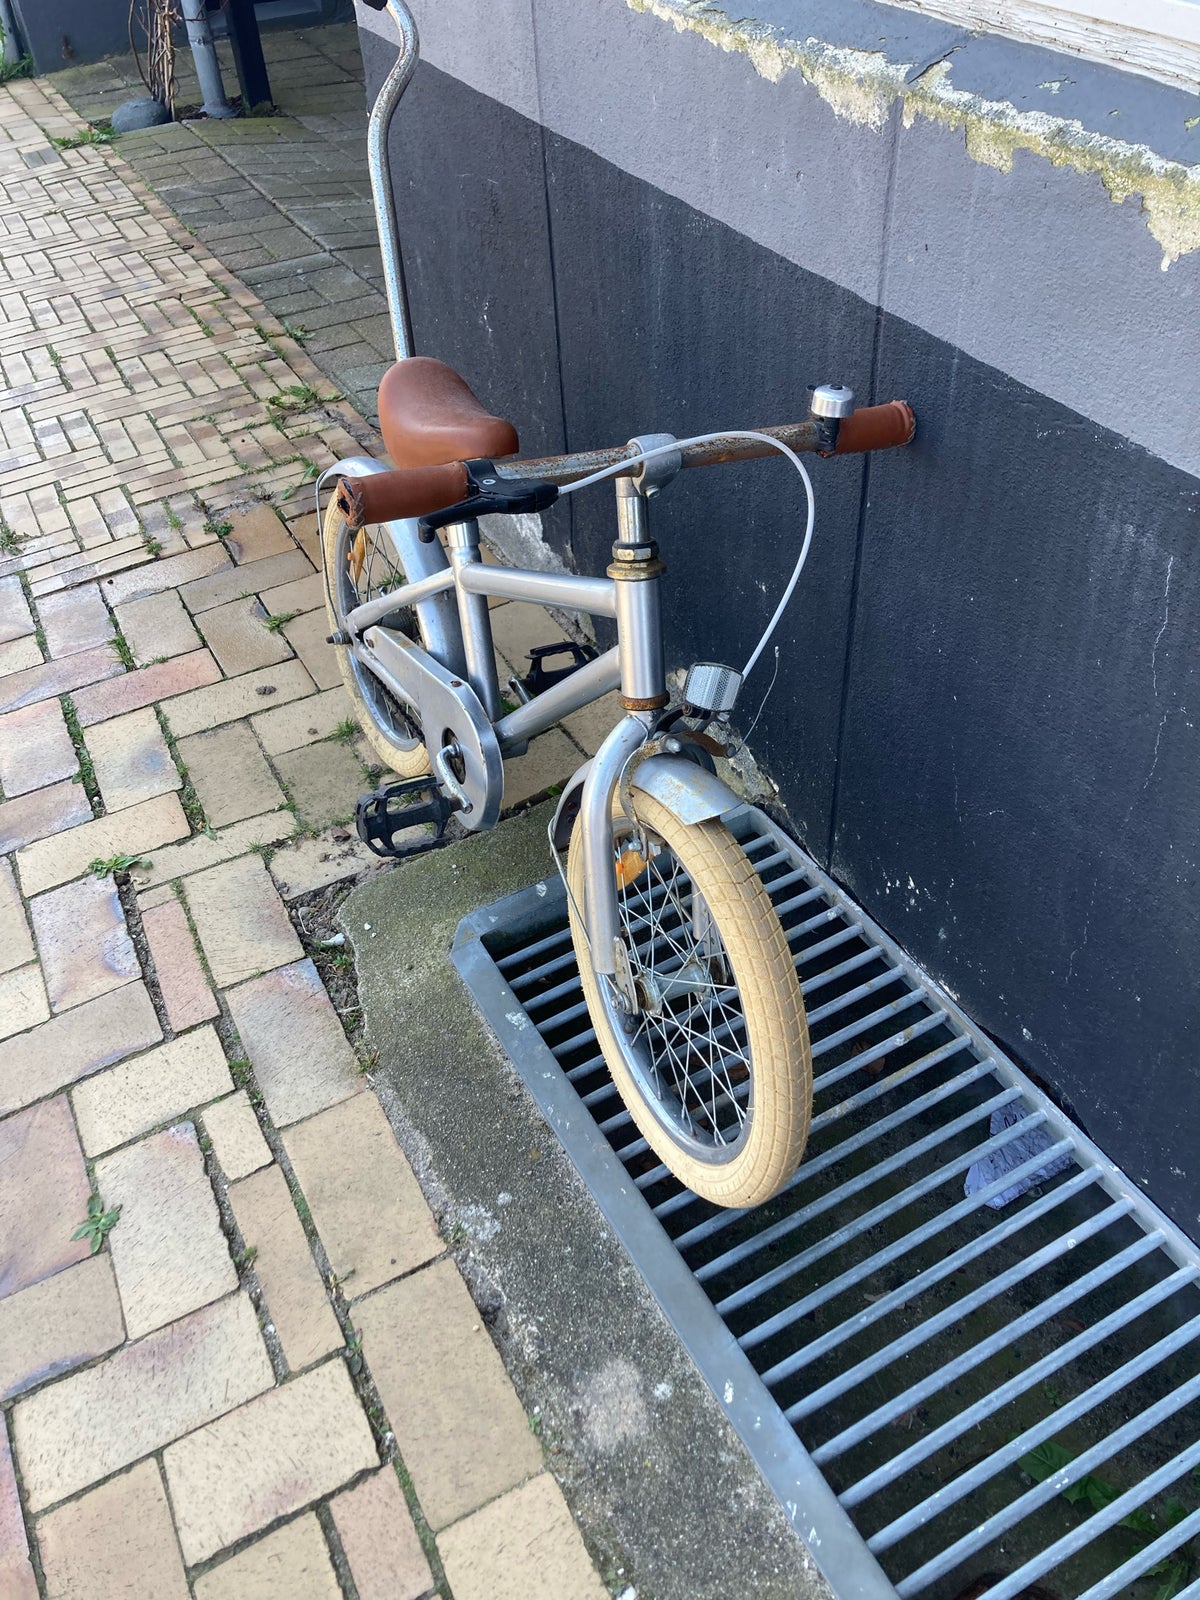 Unisex børnecykel, classic cykel